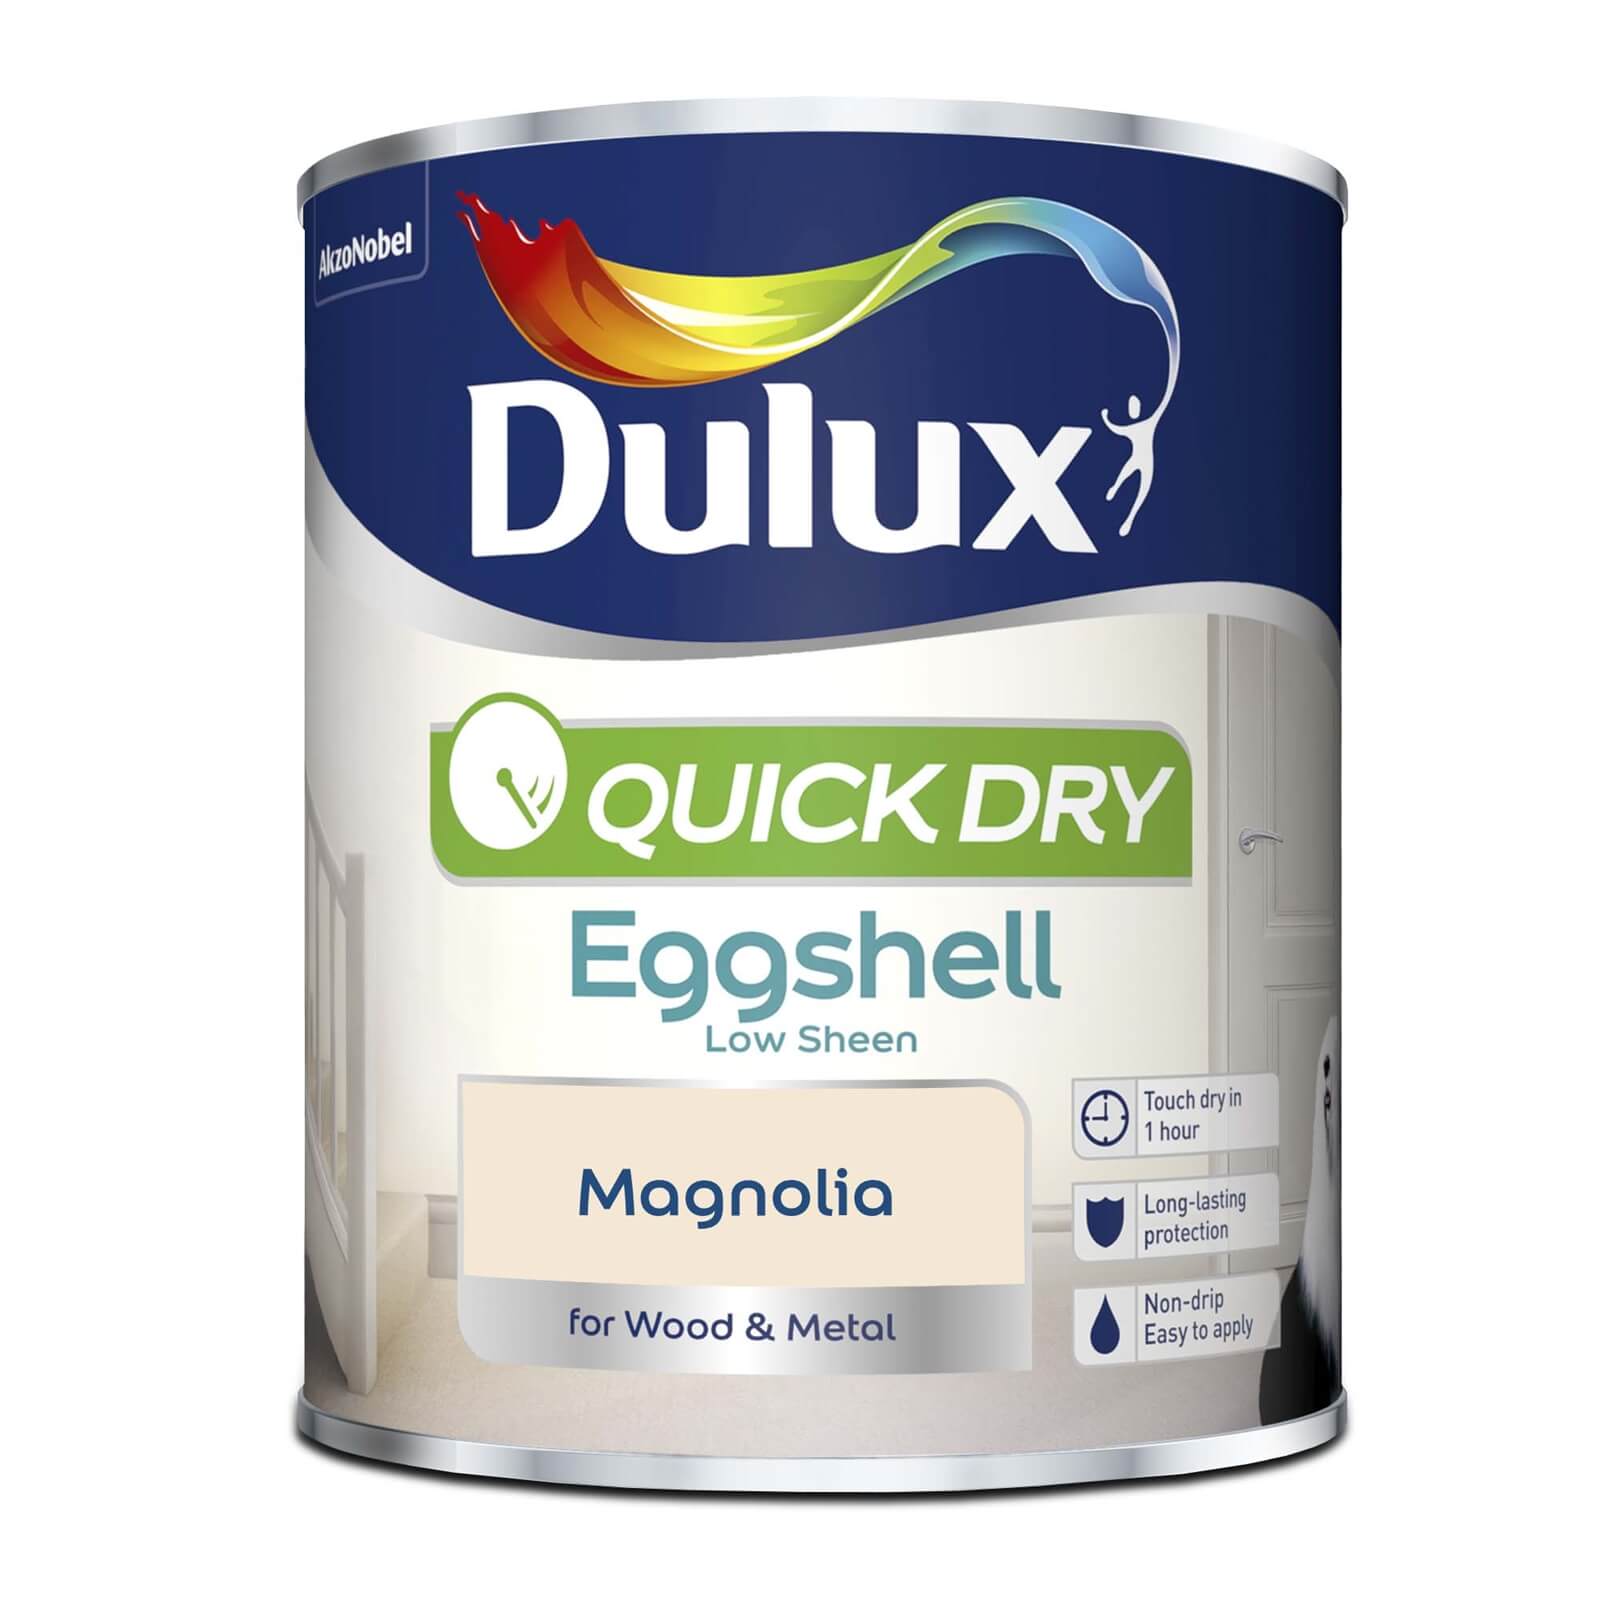 Dulux Quick Dry Eggshell Paint Magnolia - 750ml